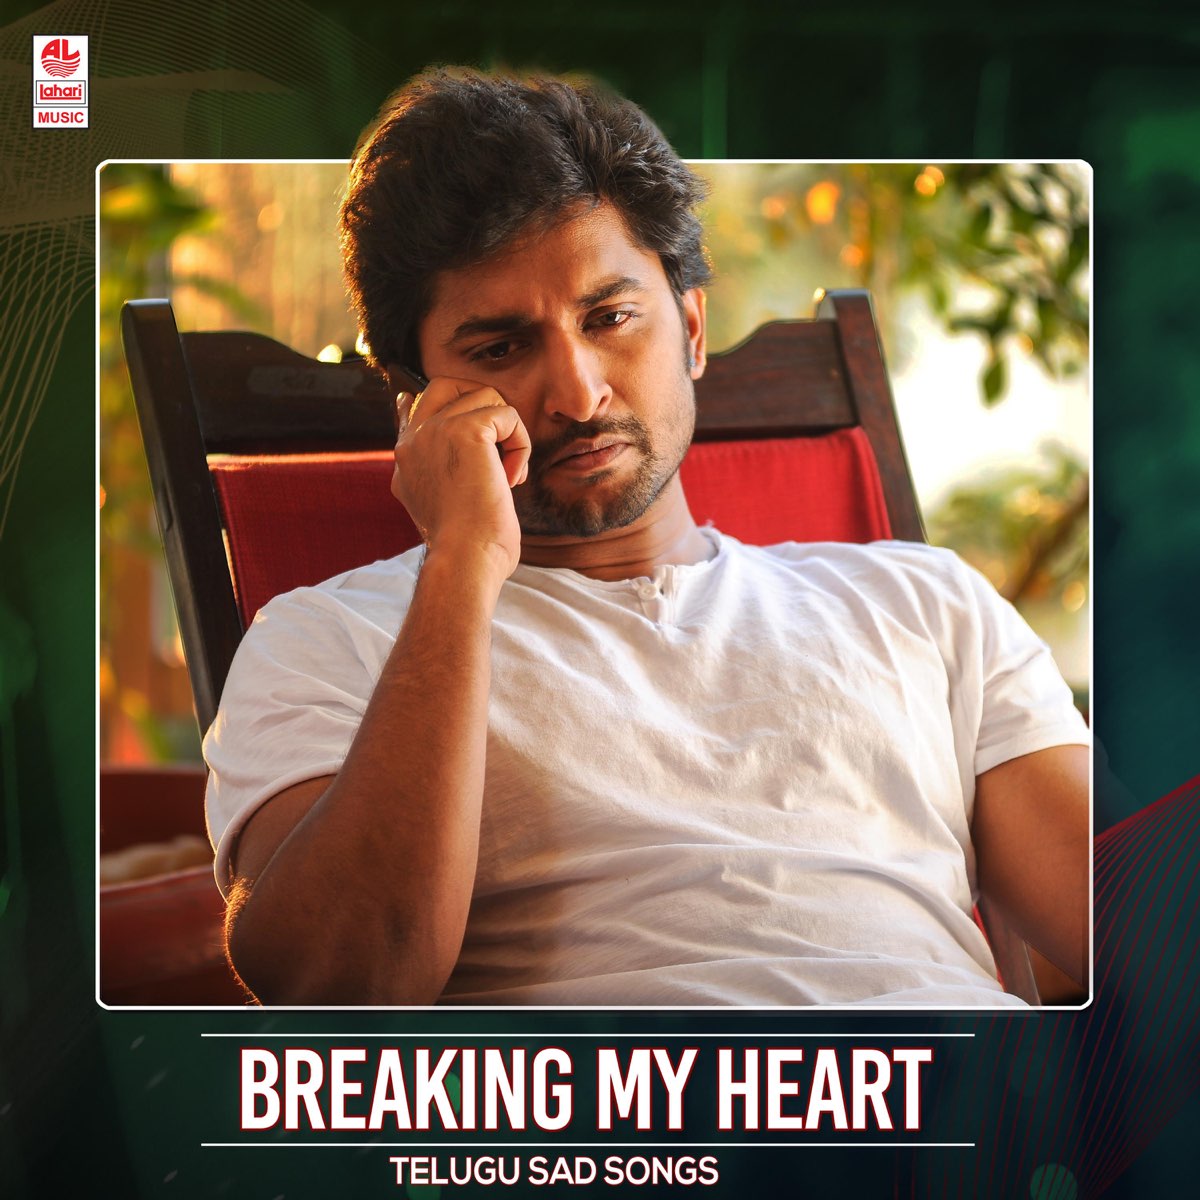 Breaking My Heart Telugu Sad Songs by Various Artists on Apple Music